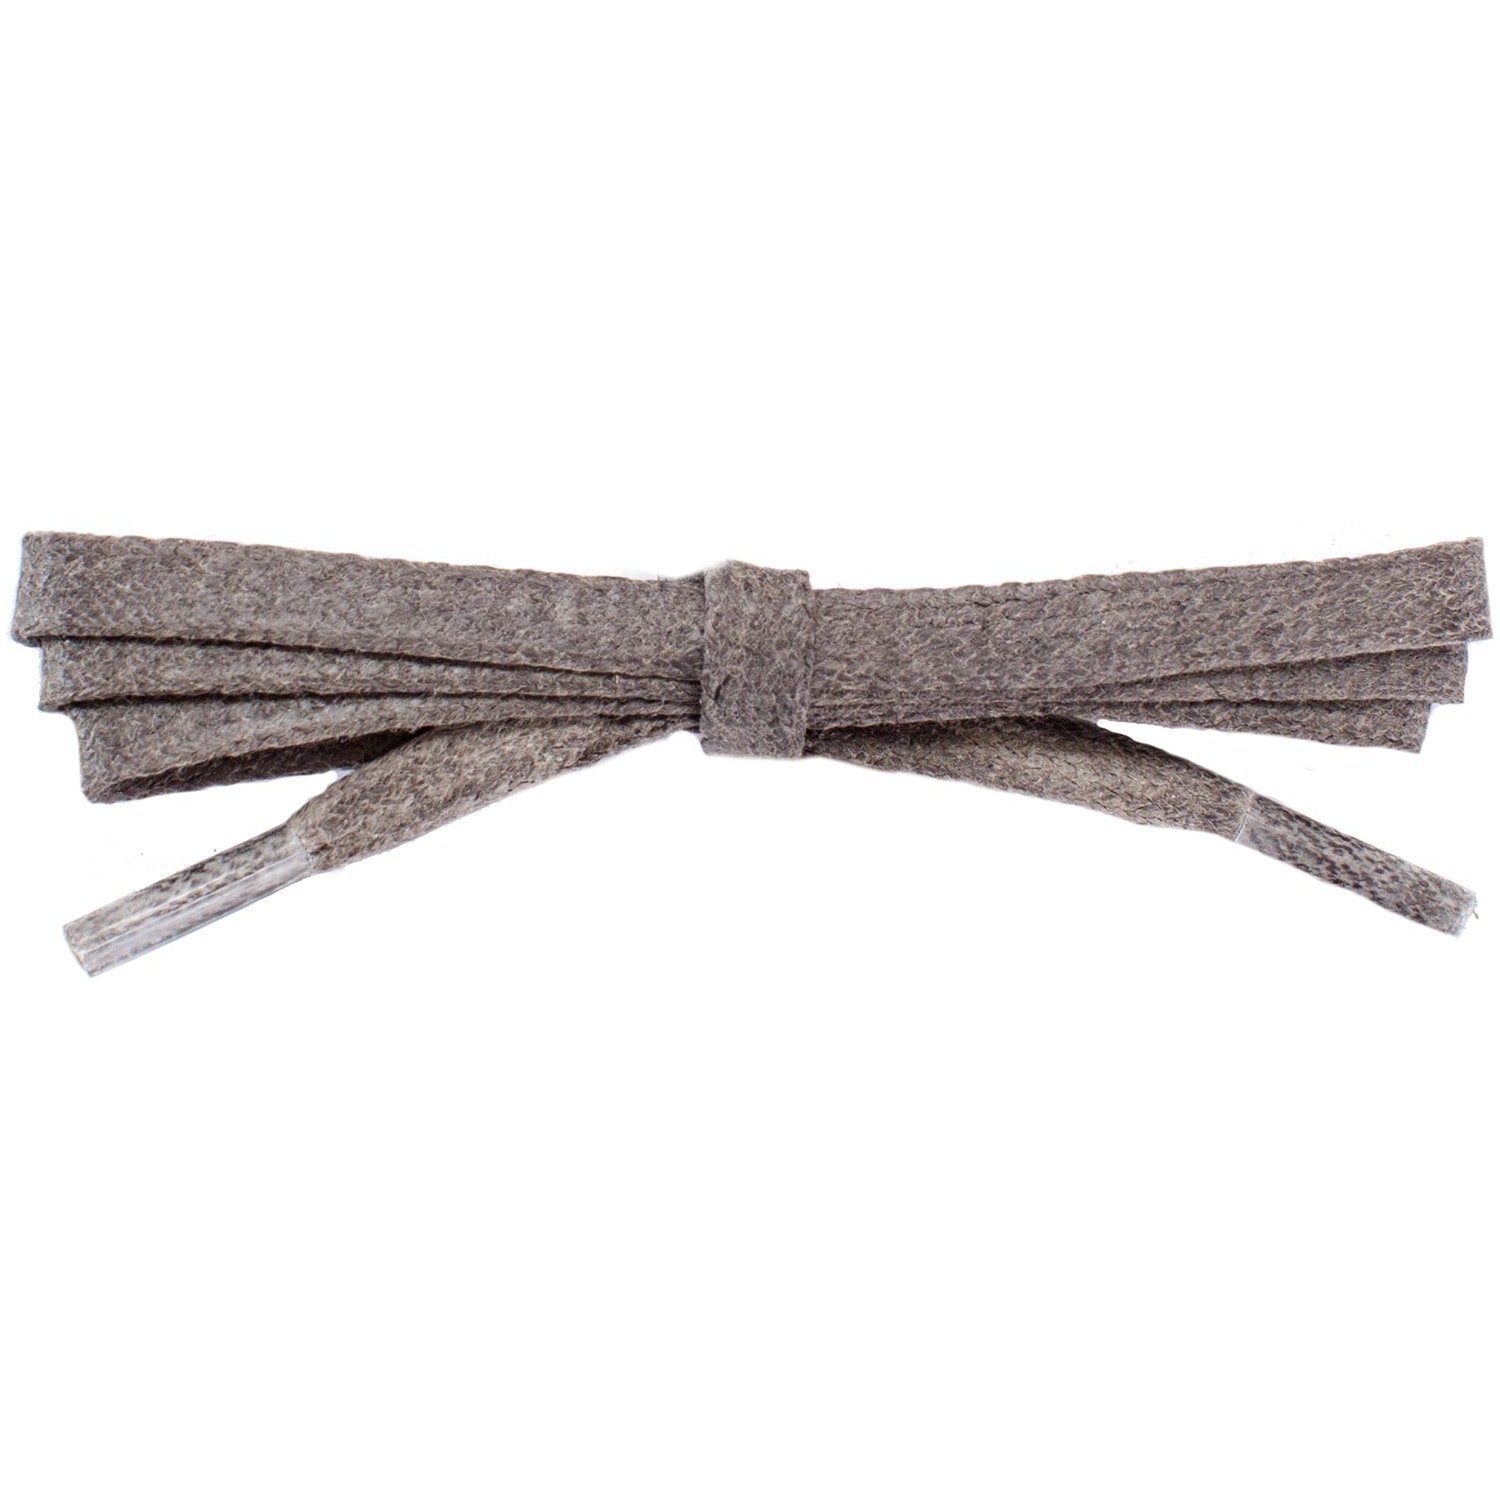 Wholesale Waxed Cotton Flat DRESS Laces 1/4'' - Taupe (12 Pair Pack) Shoelaces